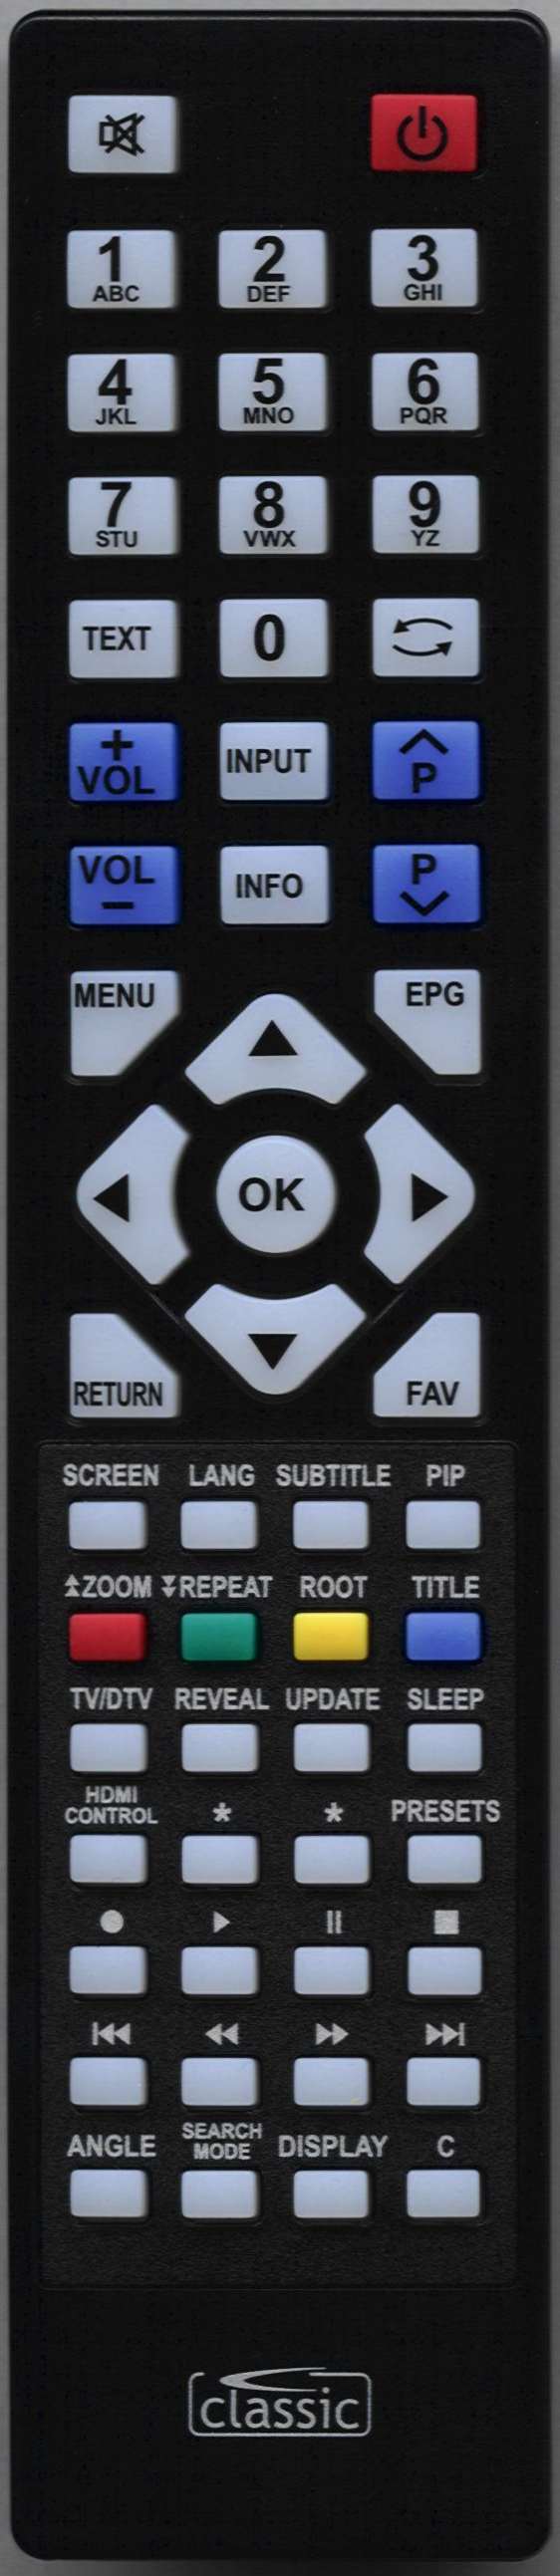 OKI C40VB-FHTUV Remote Control